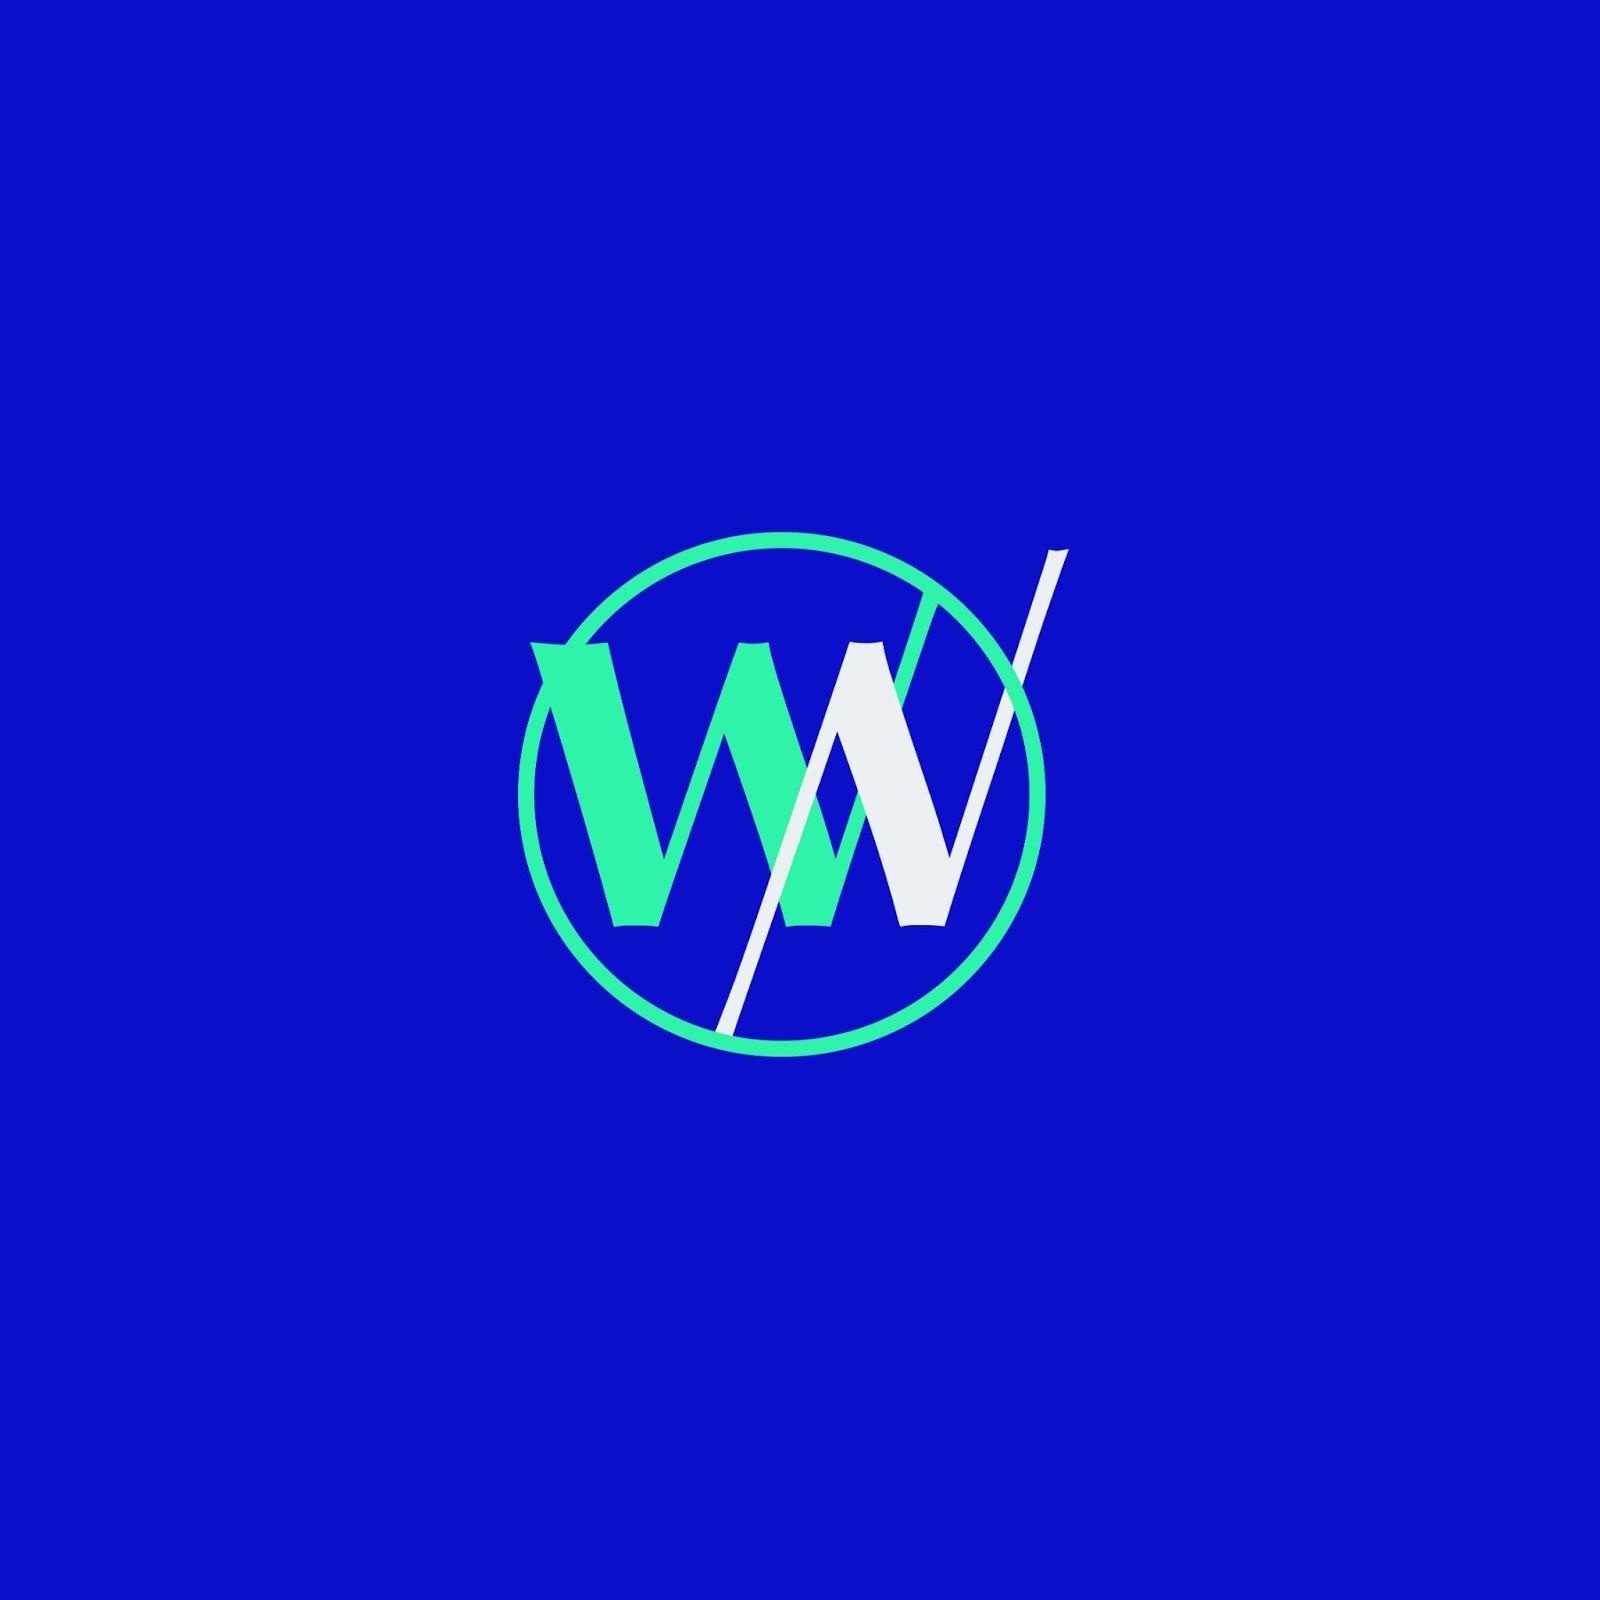 Wknd Nation休闲服品牌视觉设计